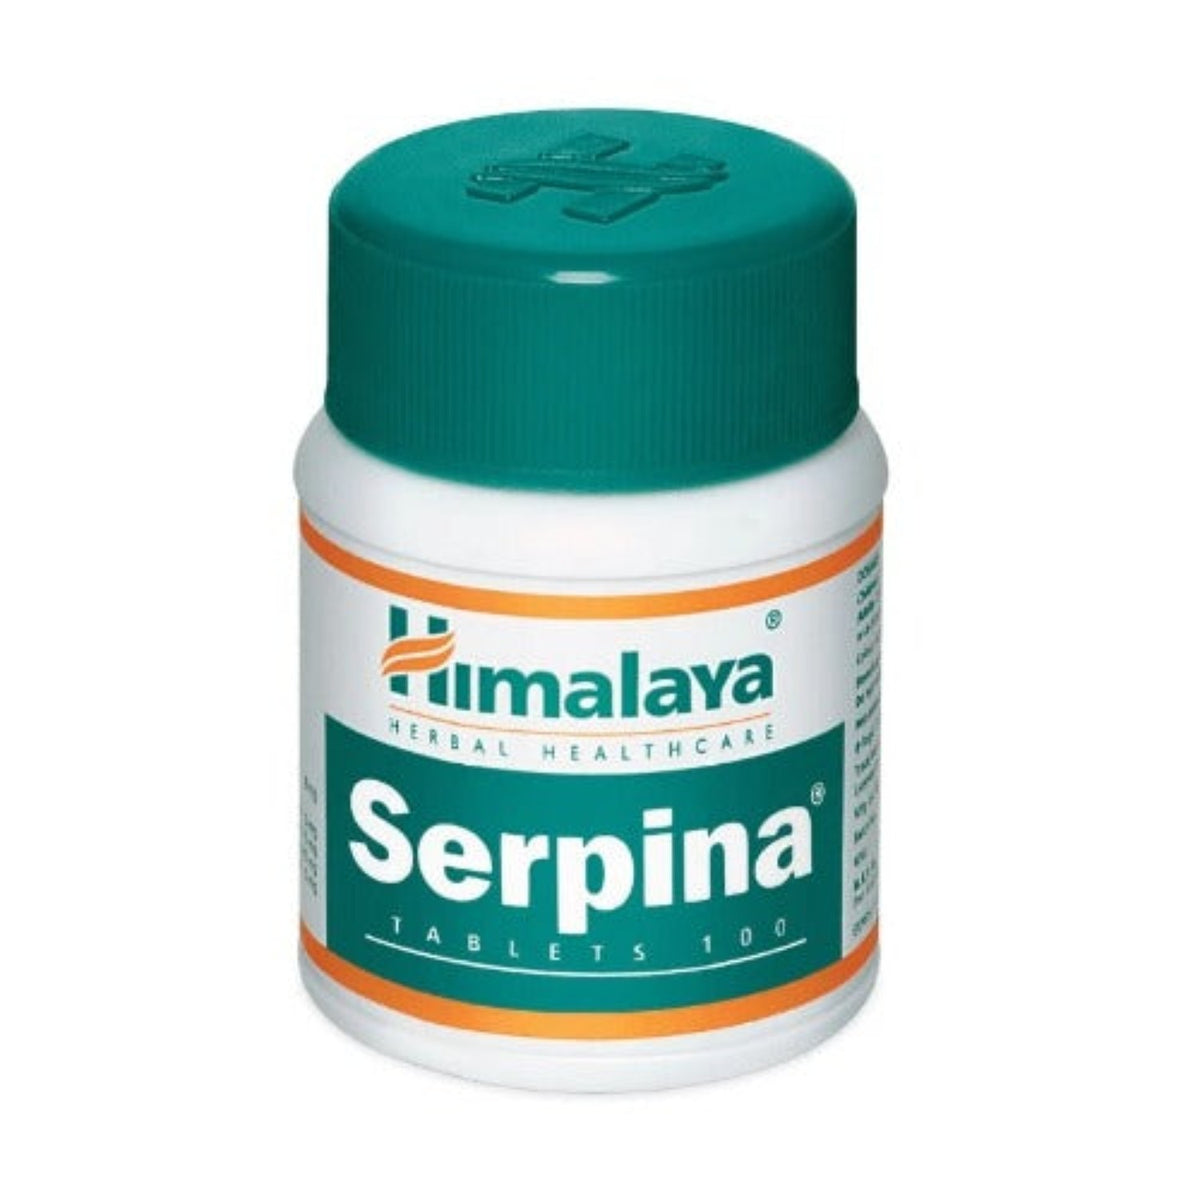 Himalaya Herbal Ayurvedic Serpina 100 Tablets